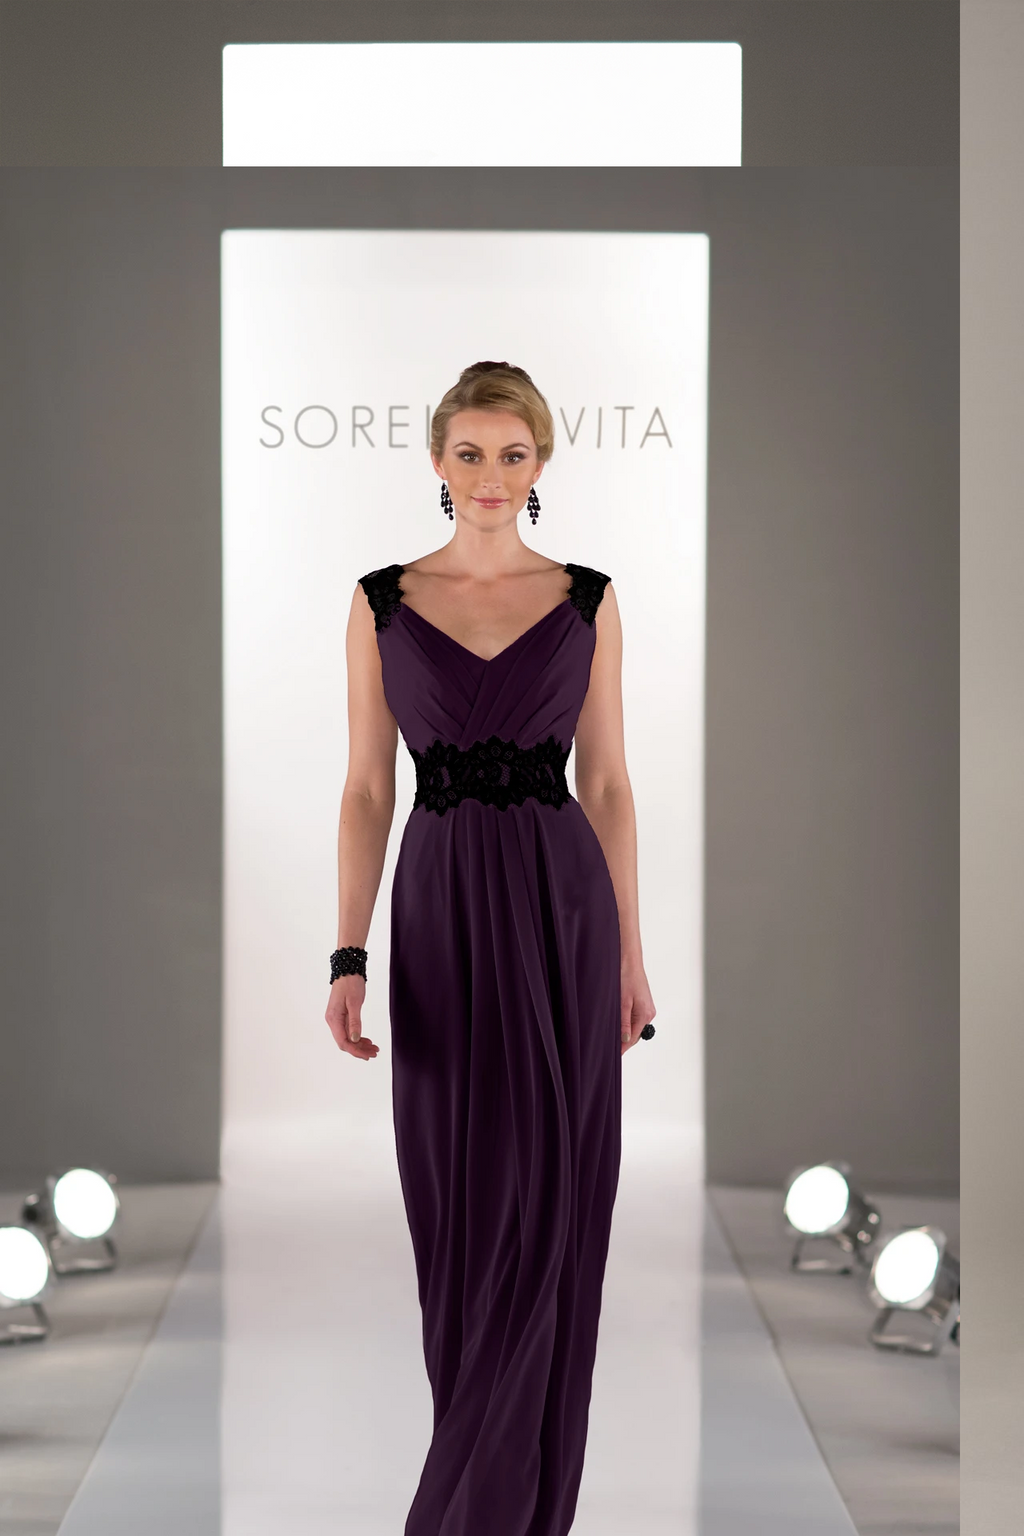 Sorella Vita Dress Style 8324 (Aubergine-Black-size 16) Prom, Ball., Black-tie, Bridesmaid, Pageant